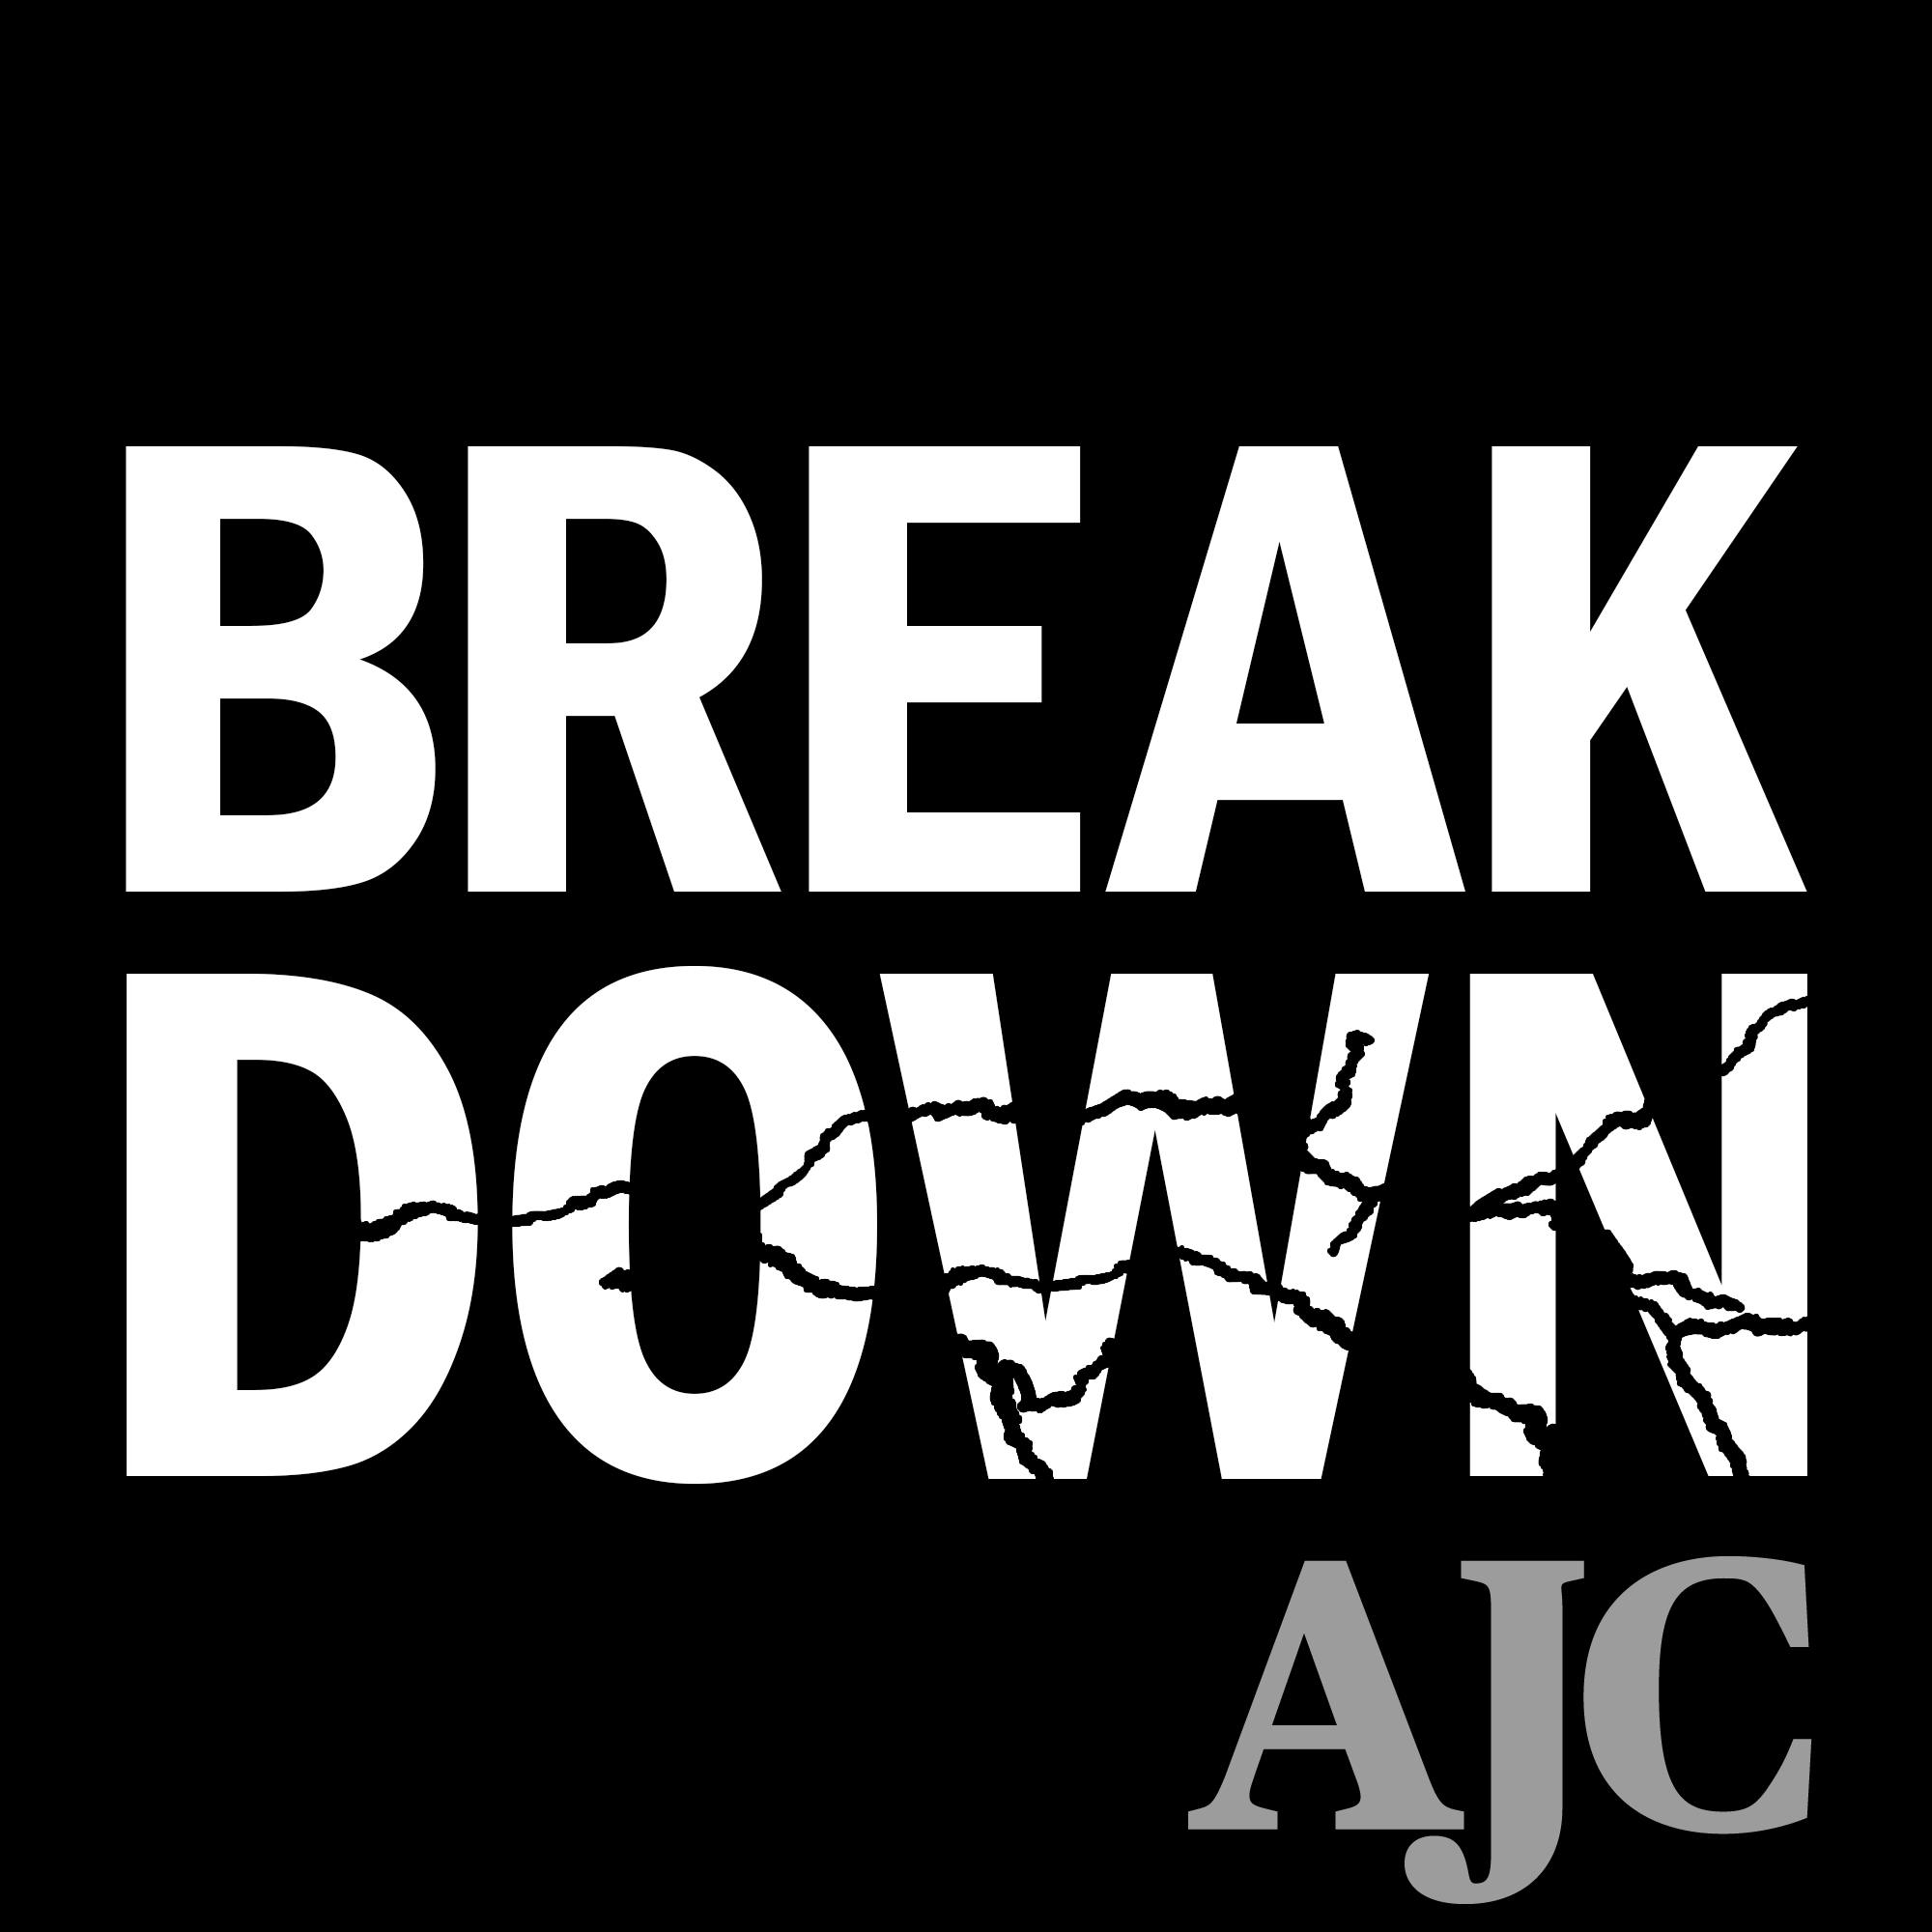 Coming soon: The 7th season of Breakdown